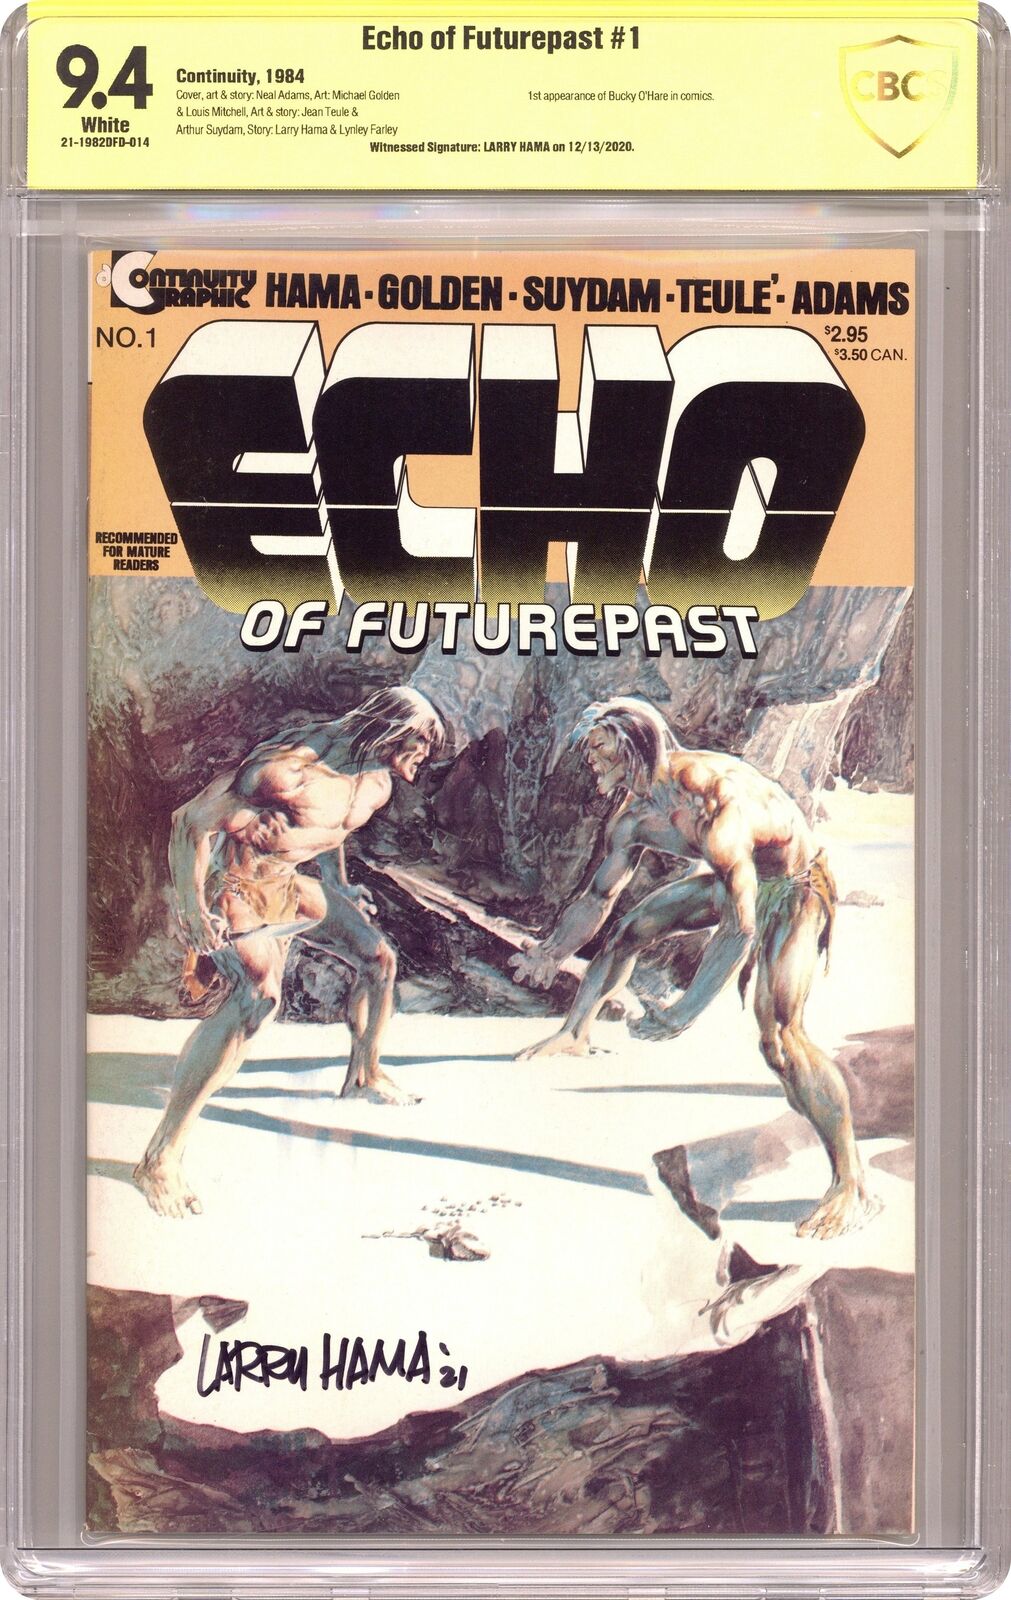 Echo of Futurepast #1 CBCS 9.4 SS Larry Hama 1984 21-1982DFD-014